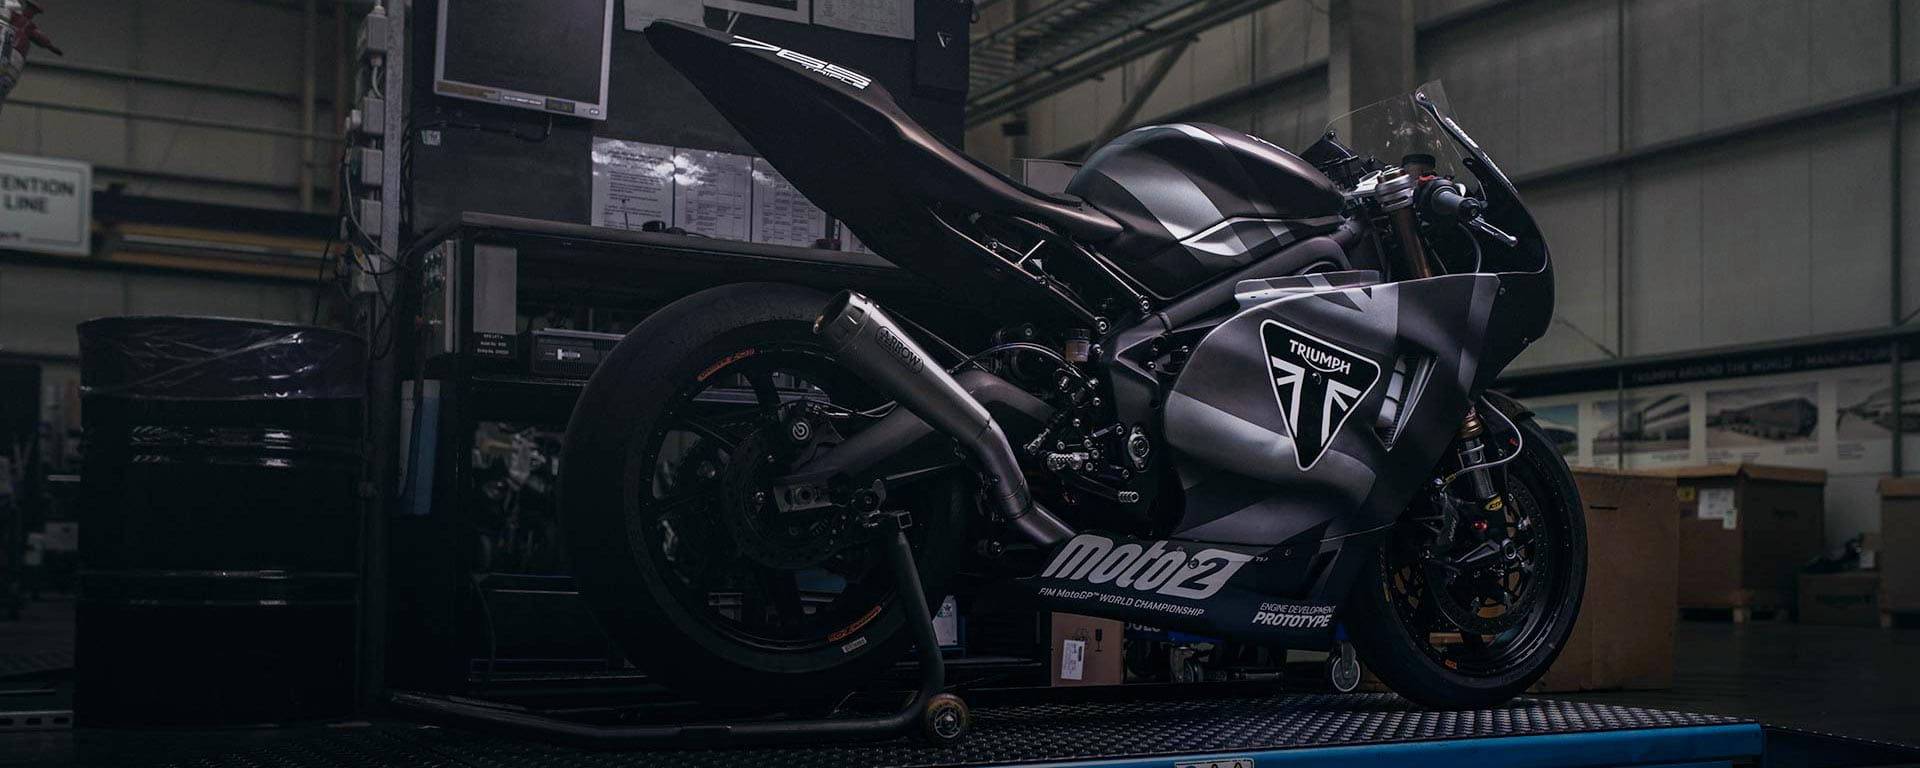 Triumph moto2 prototype testing)